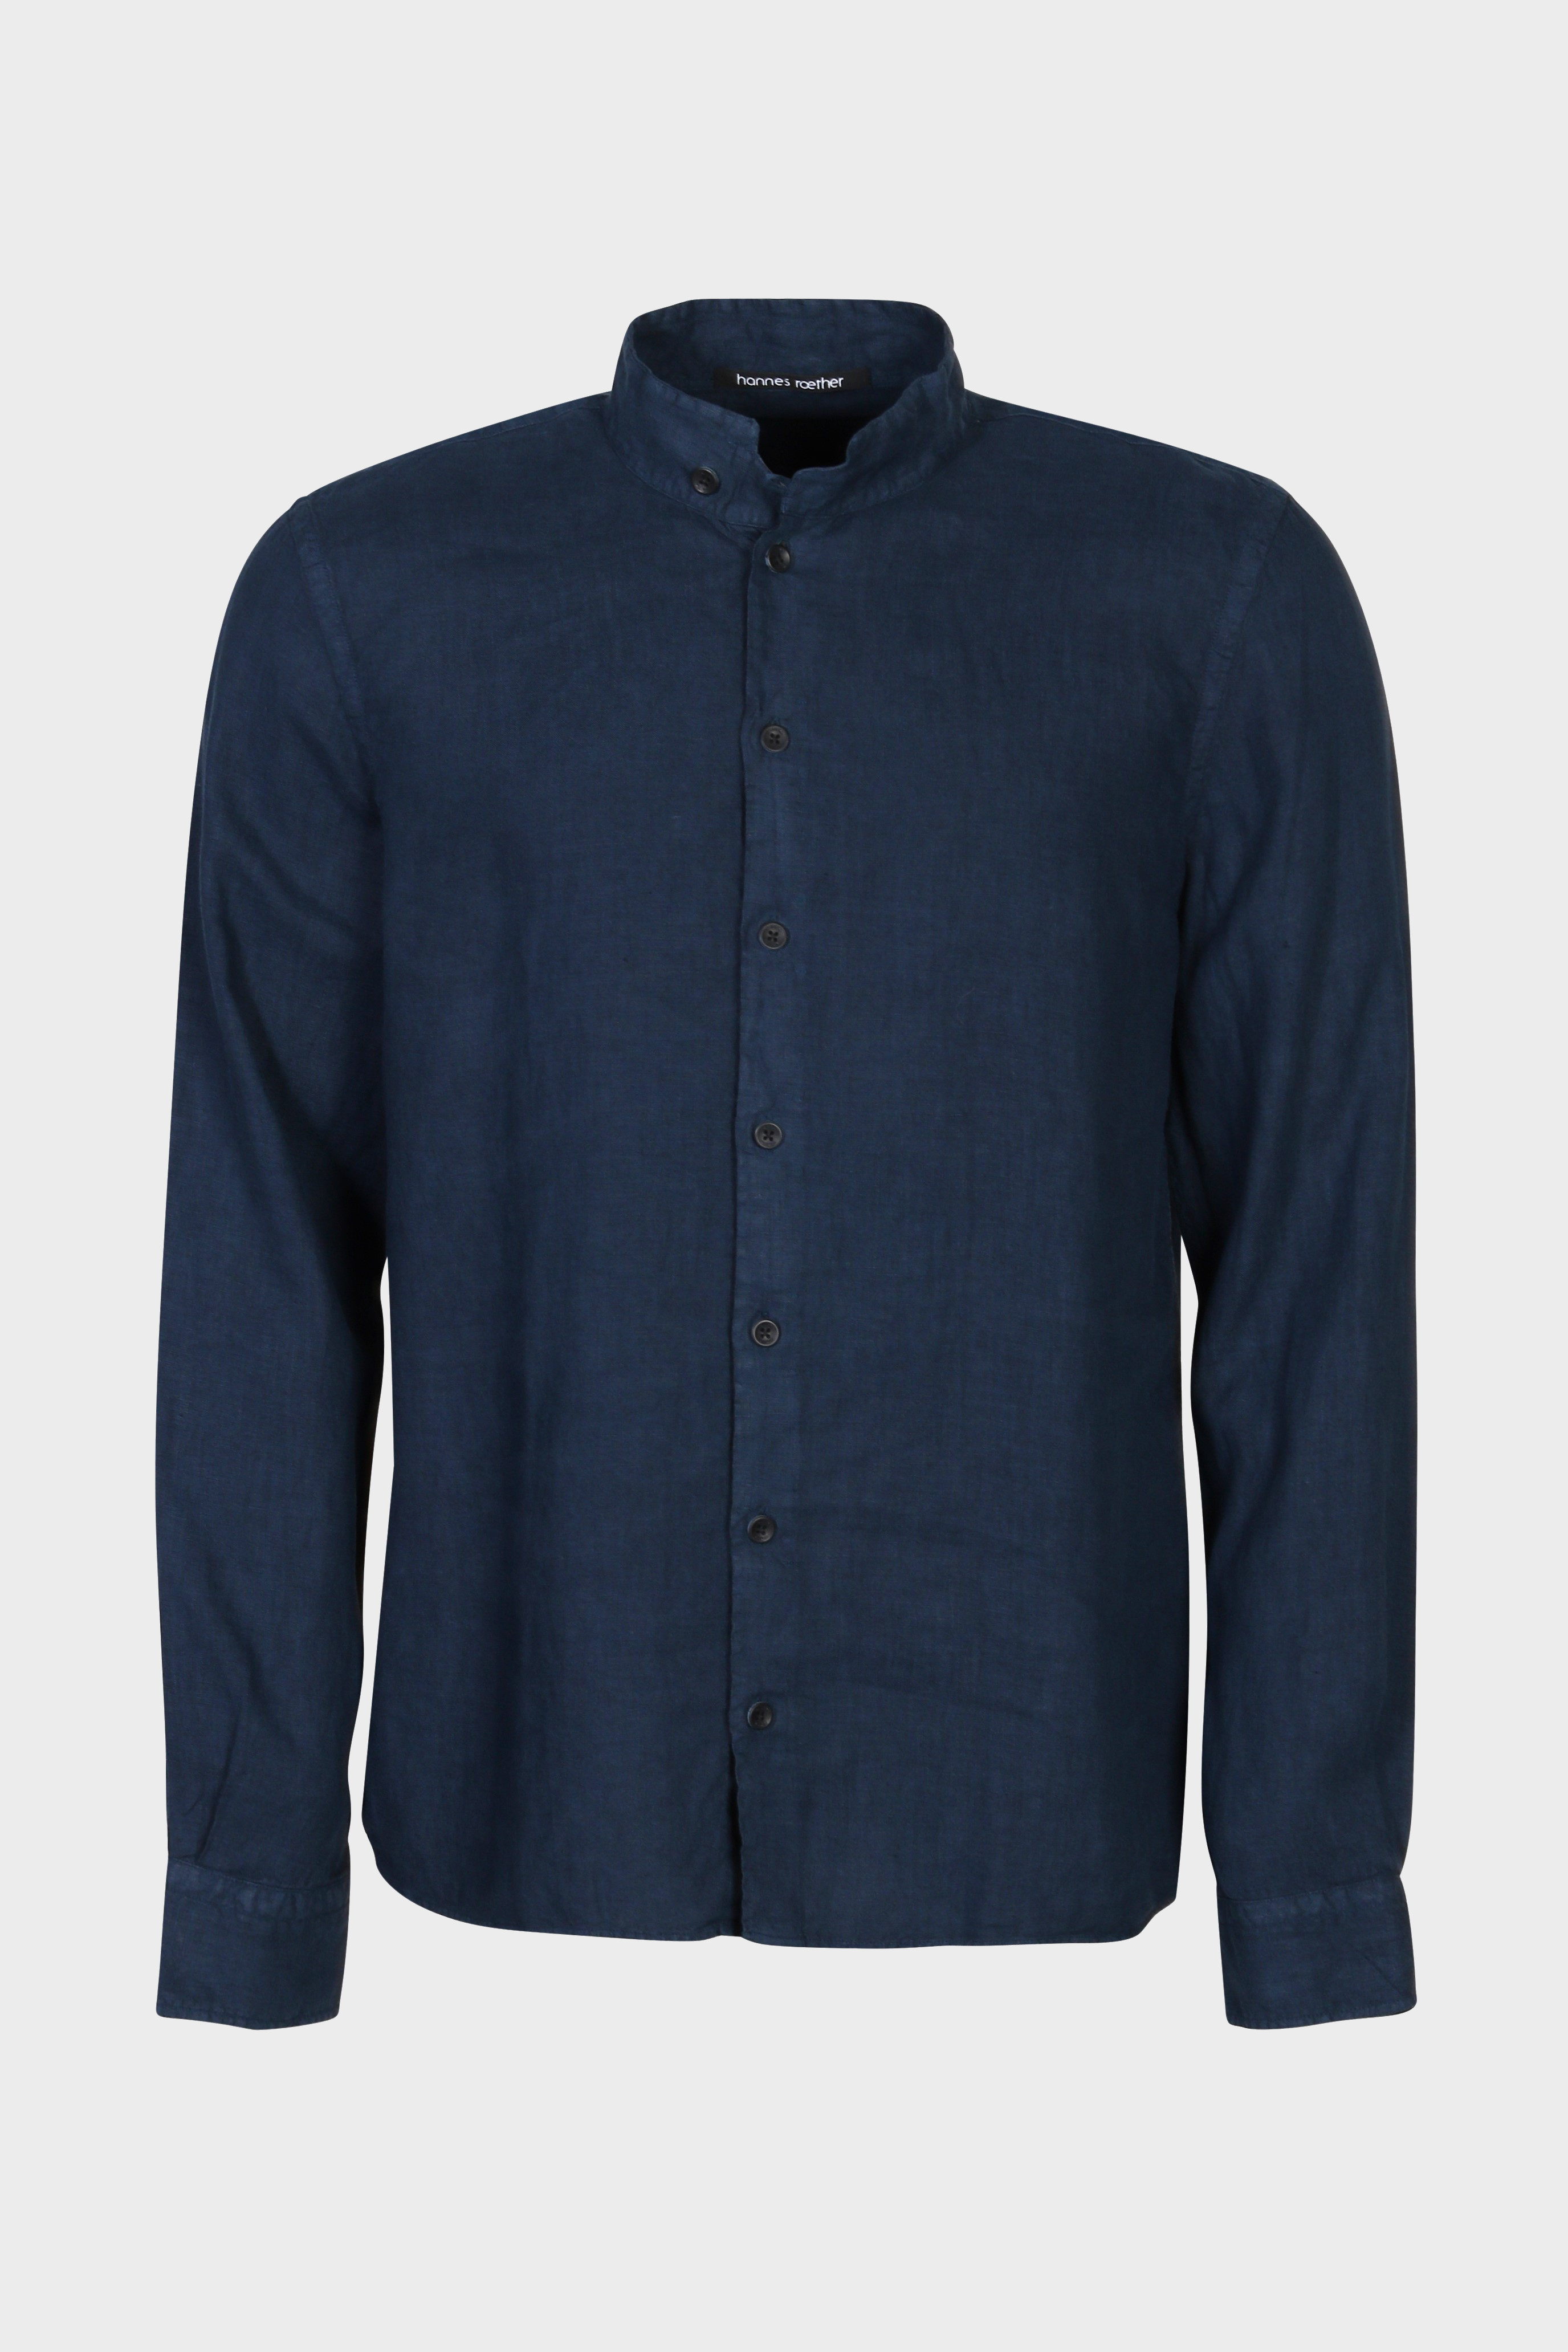 HANNES ROETHER Linen Shirt in Dark Blue